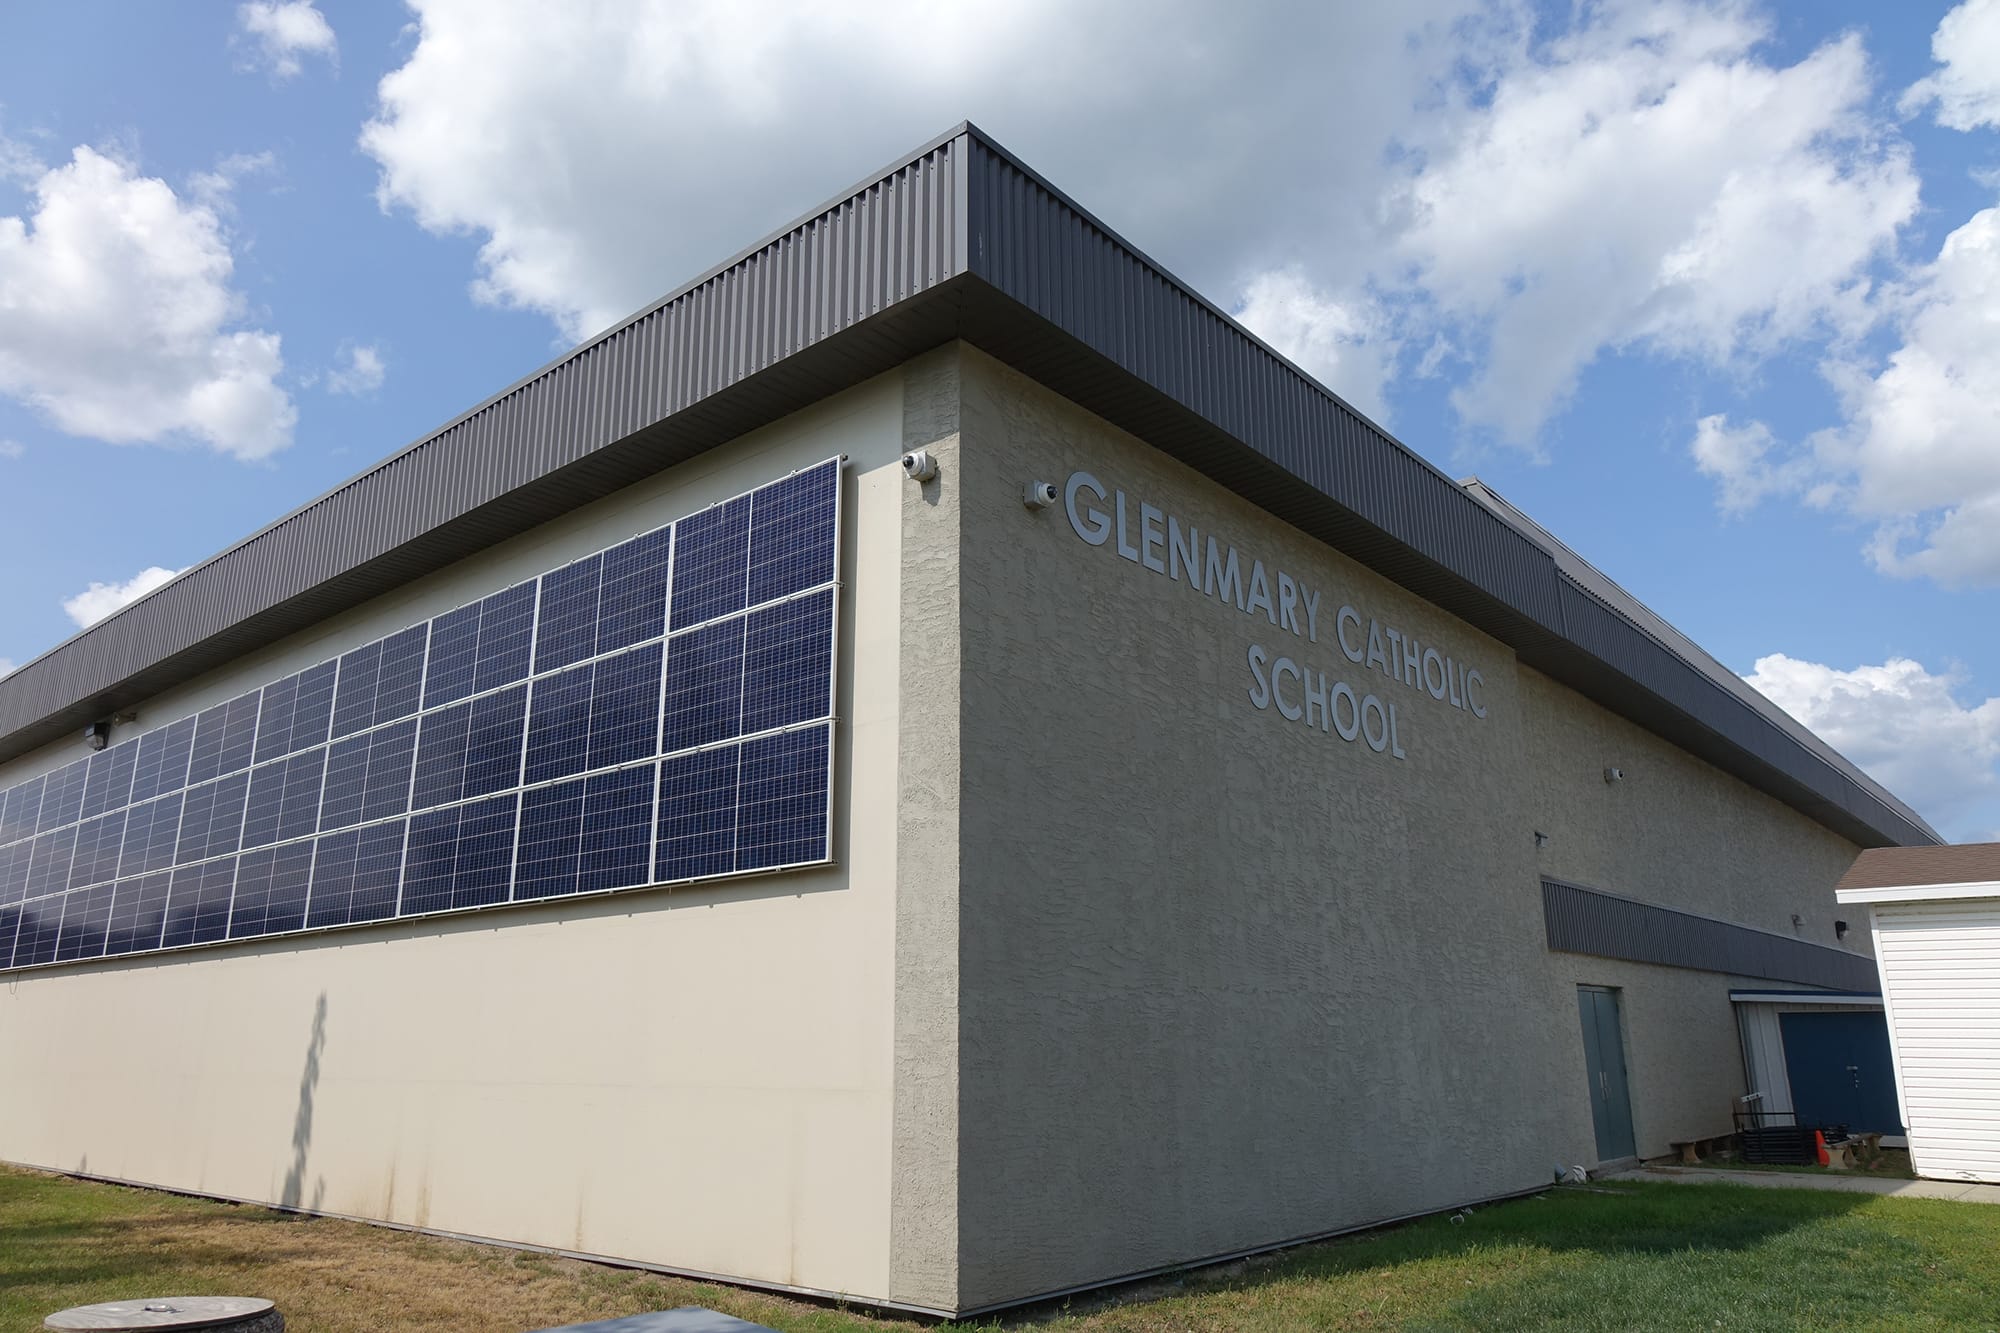 Glenmary School exterior with solar panels